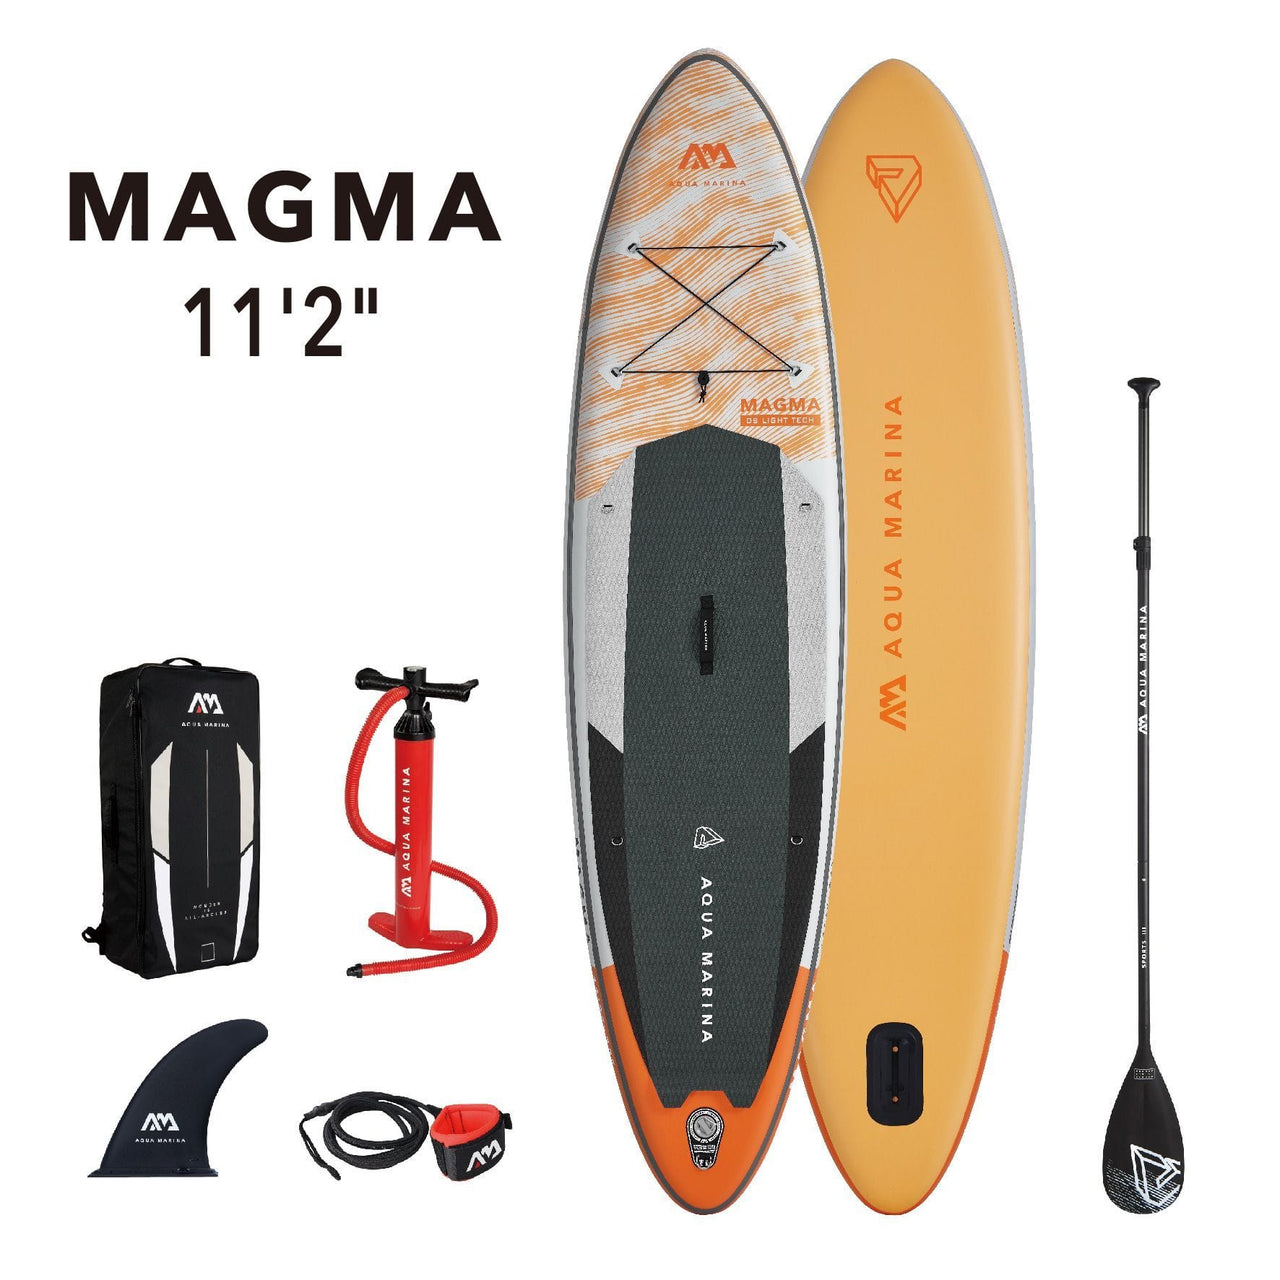 Aqua Marina 11'2” Magma 2021 Inflatable Paddle Board All-Around Advanced SUP